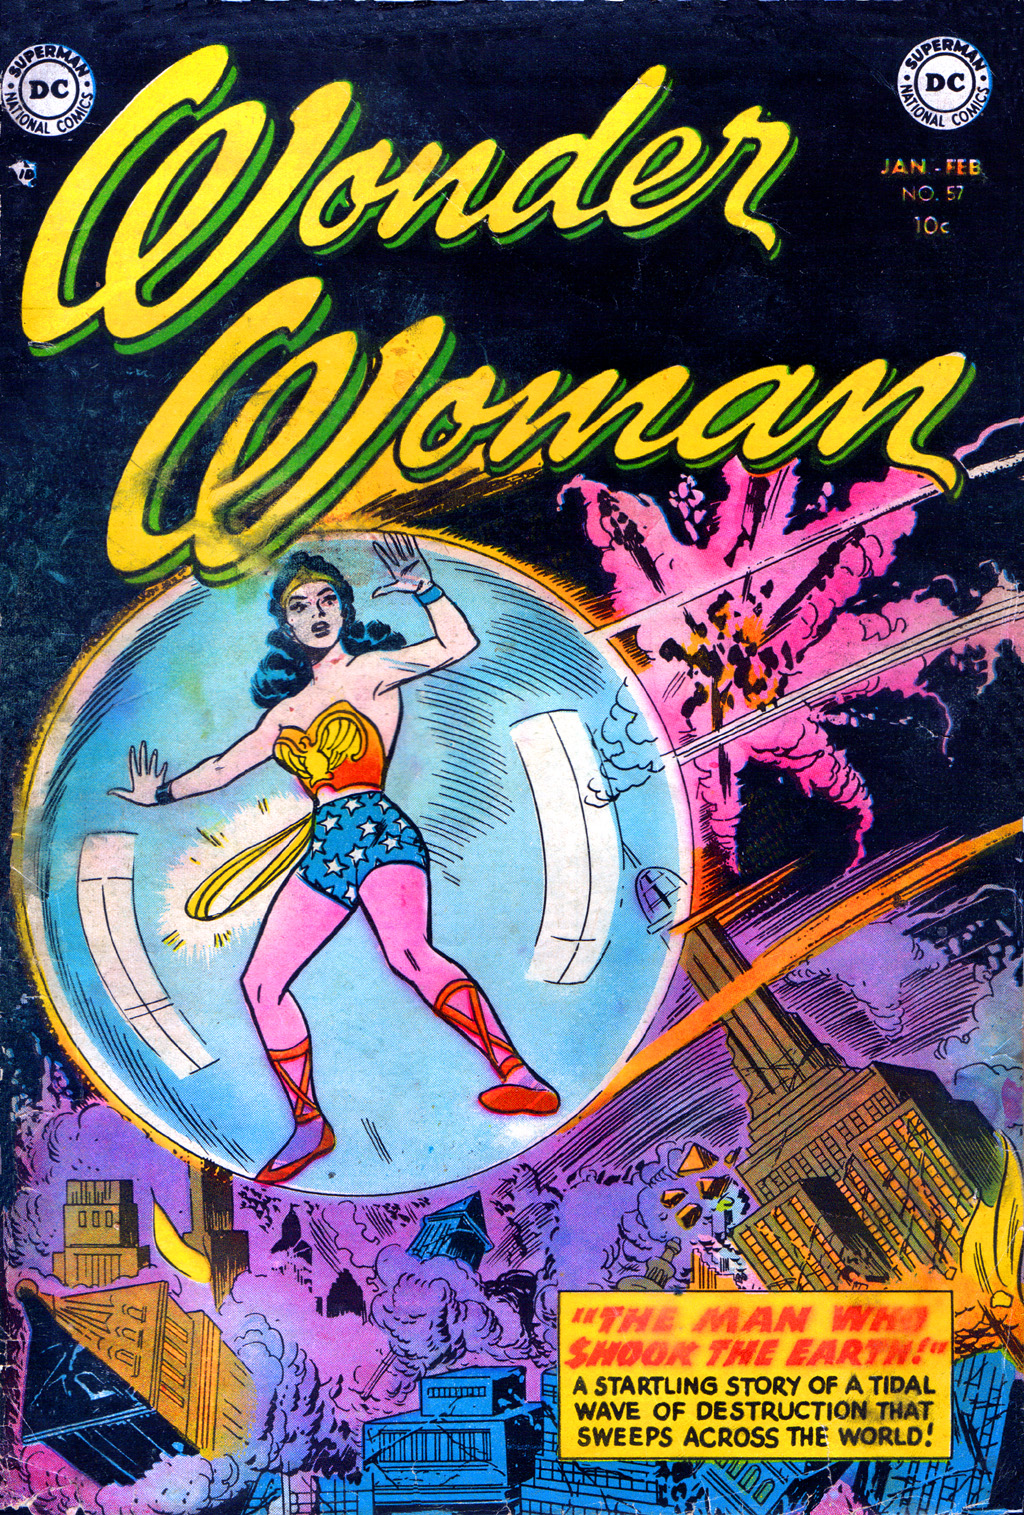 Read online Wonder Woman (1942) comic -  Issue #57 - 1